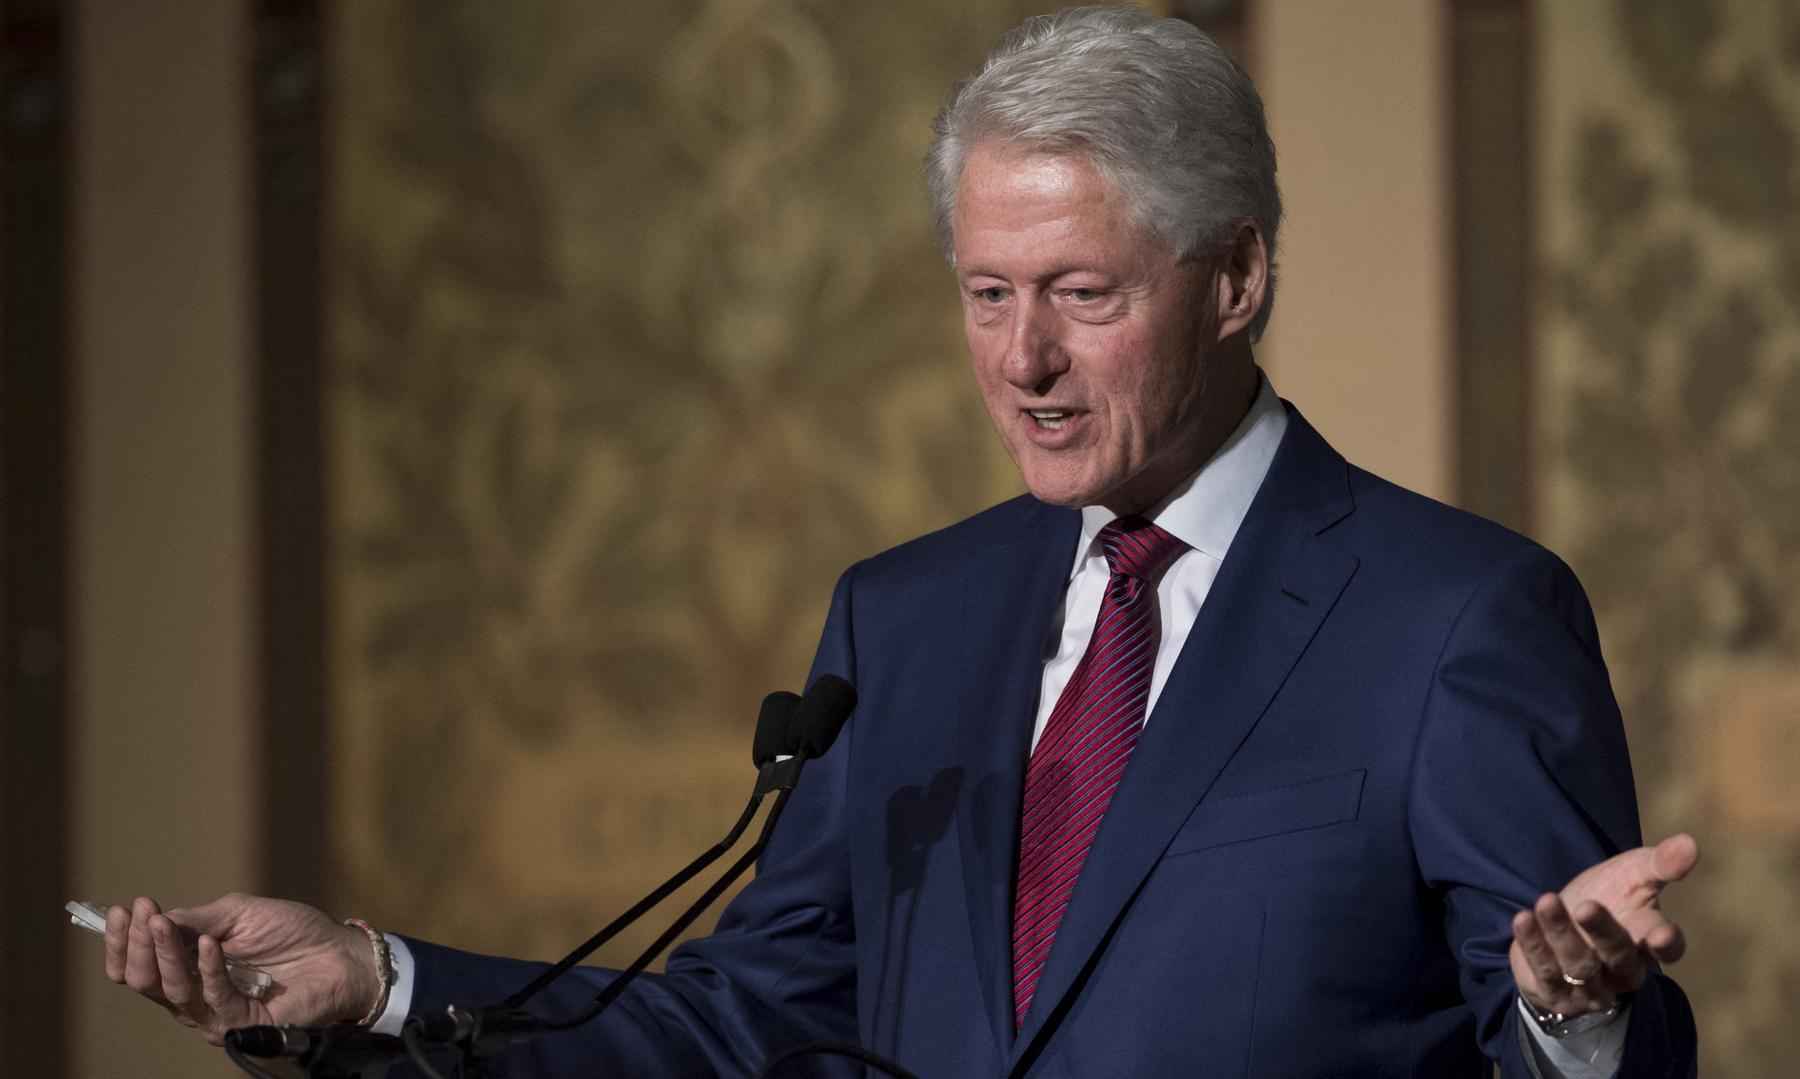 Bill Clinton, ex-presidente dos Estados Unidos, é hospitalizado - SAUL LOEB / AFP

